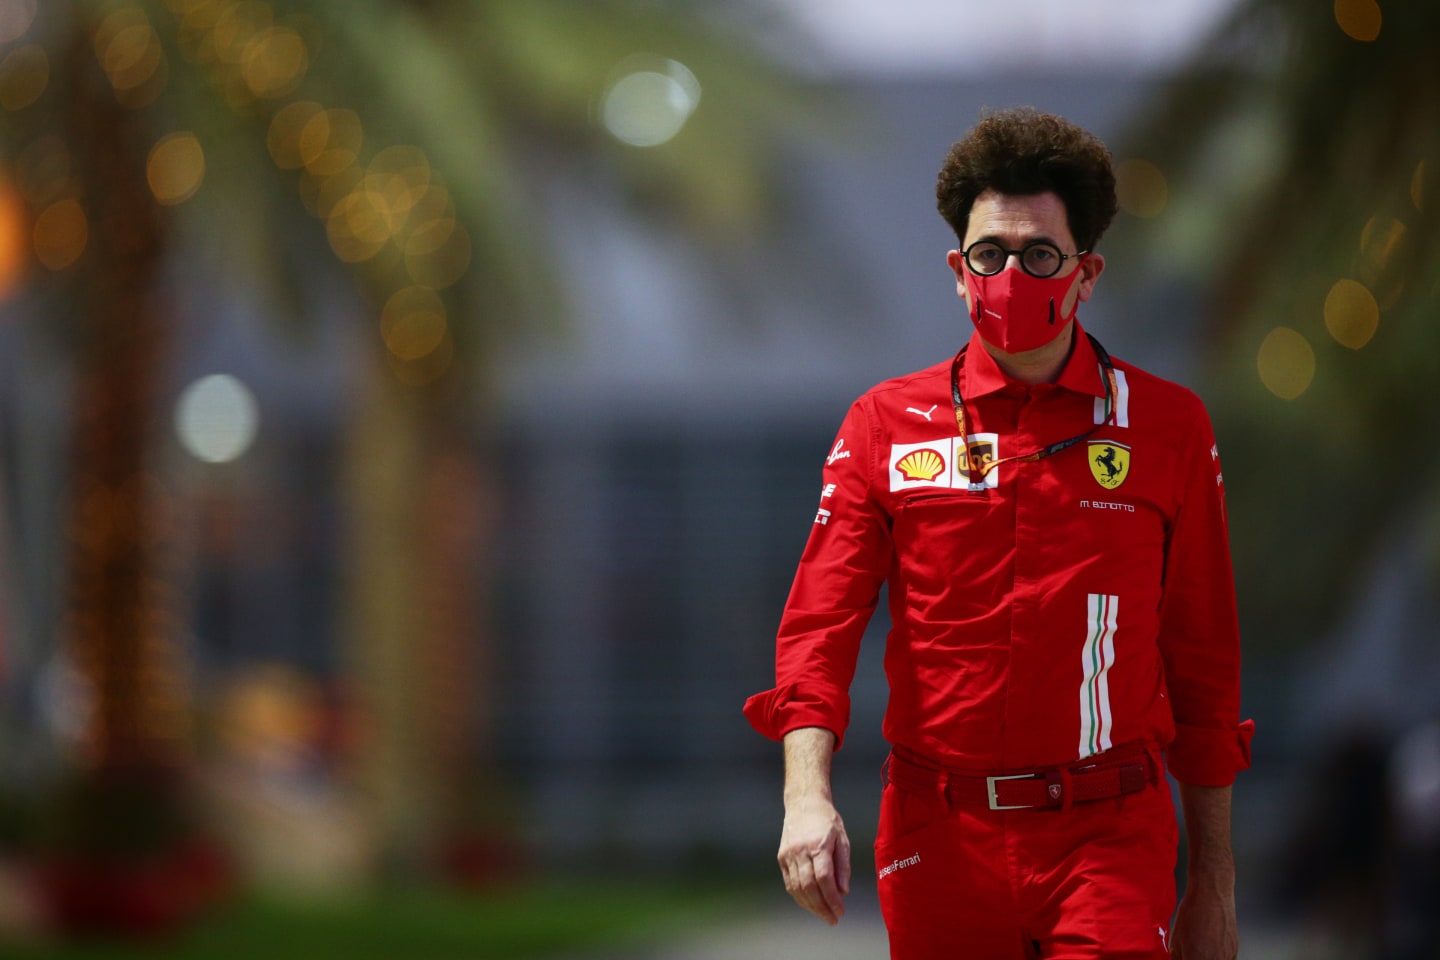 BAHRAIN, BAHRAIN - DECEMBER 03: Scuderia Ferrari Team Principal Mattia Binotto walks in the Paddock